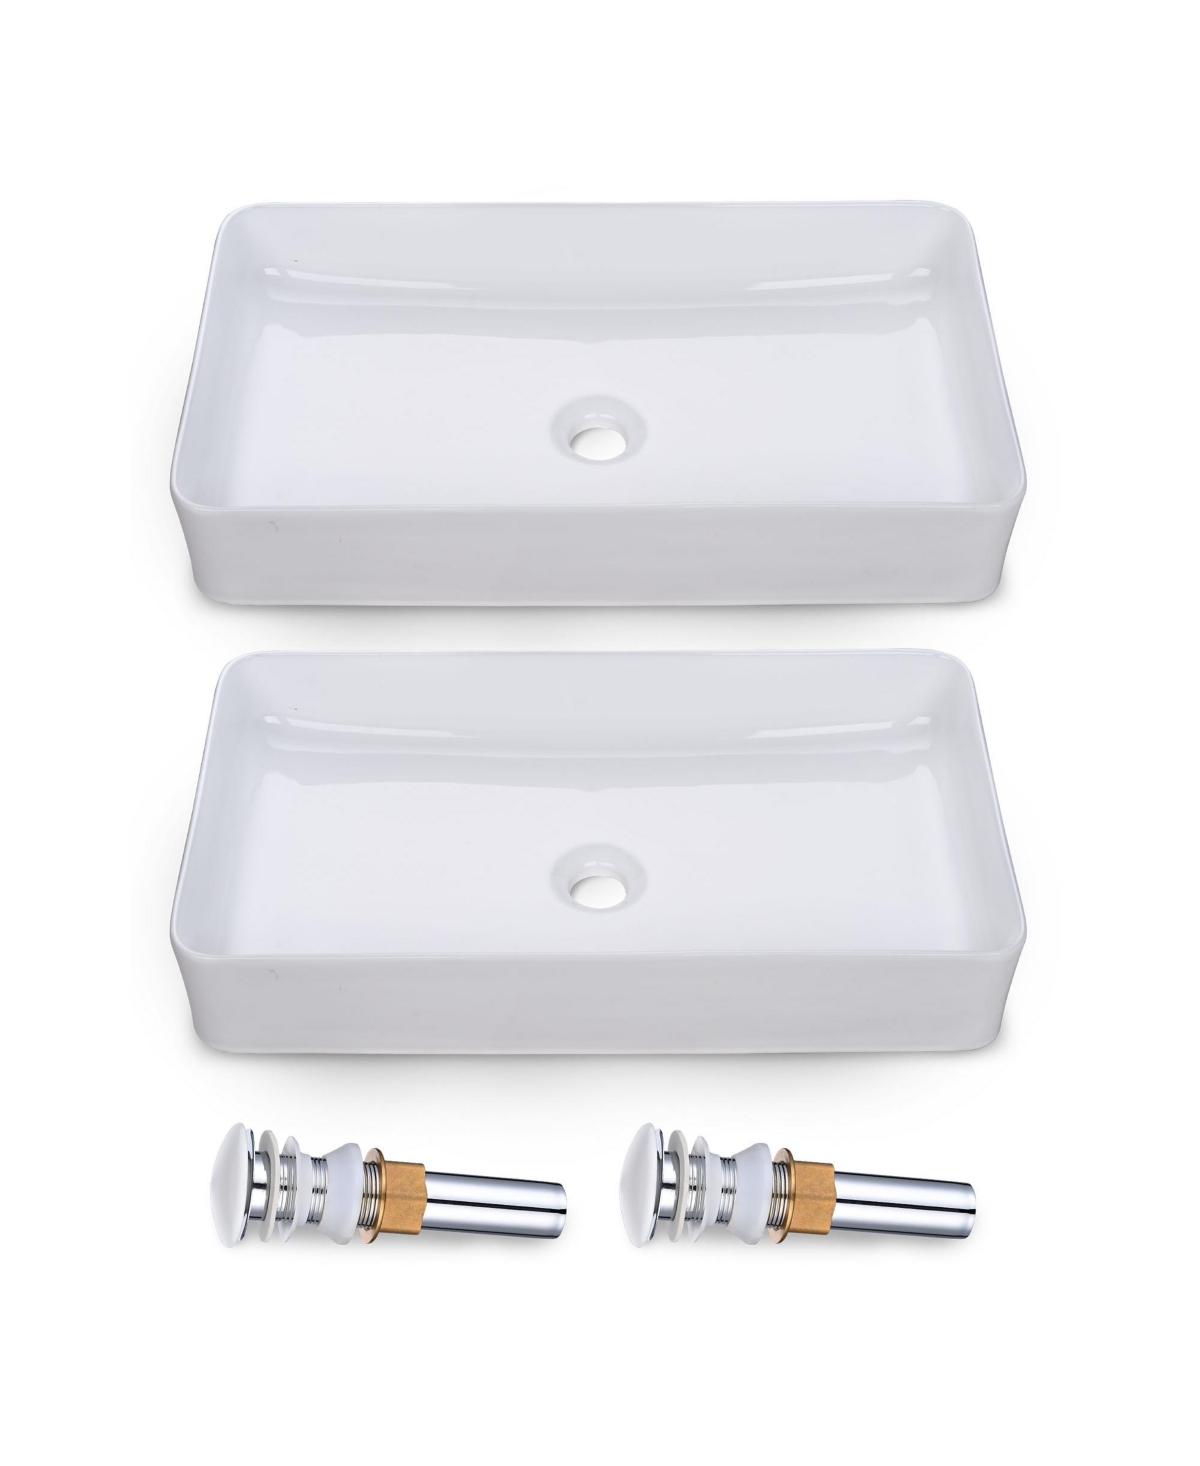 23" x 13" Rectangle Porcelain Ceramic Bathroom Vessel Sink w/Pop Up Drain 2 Pack - Natural